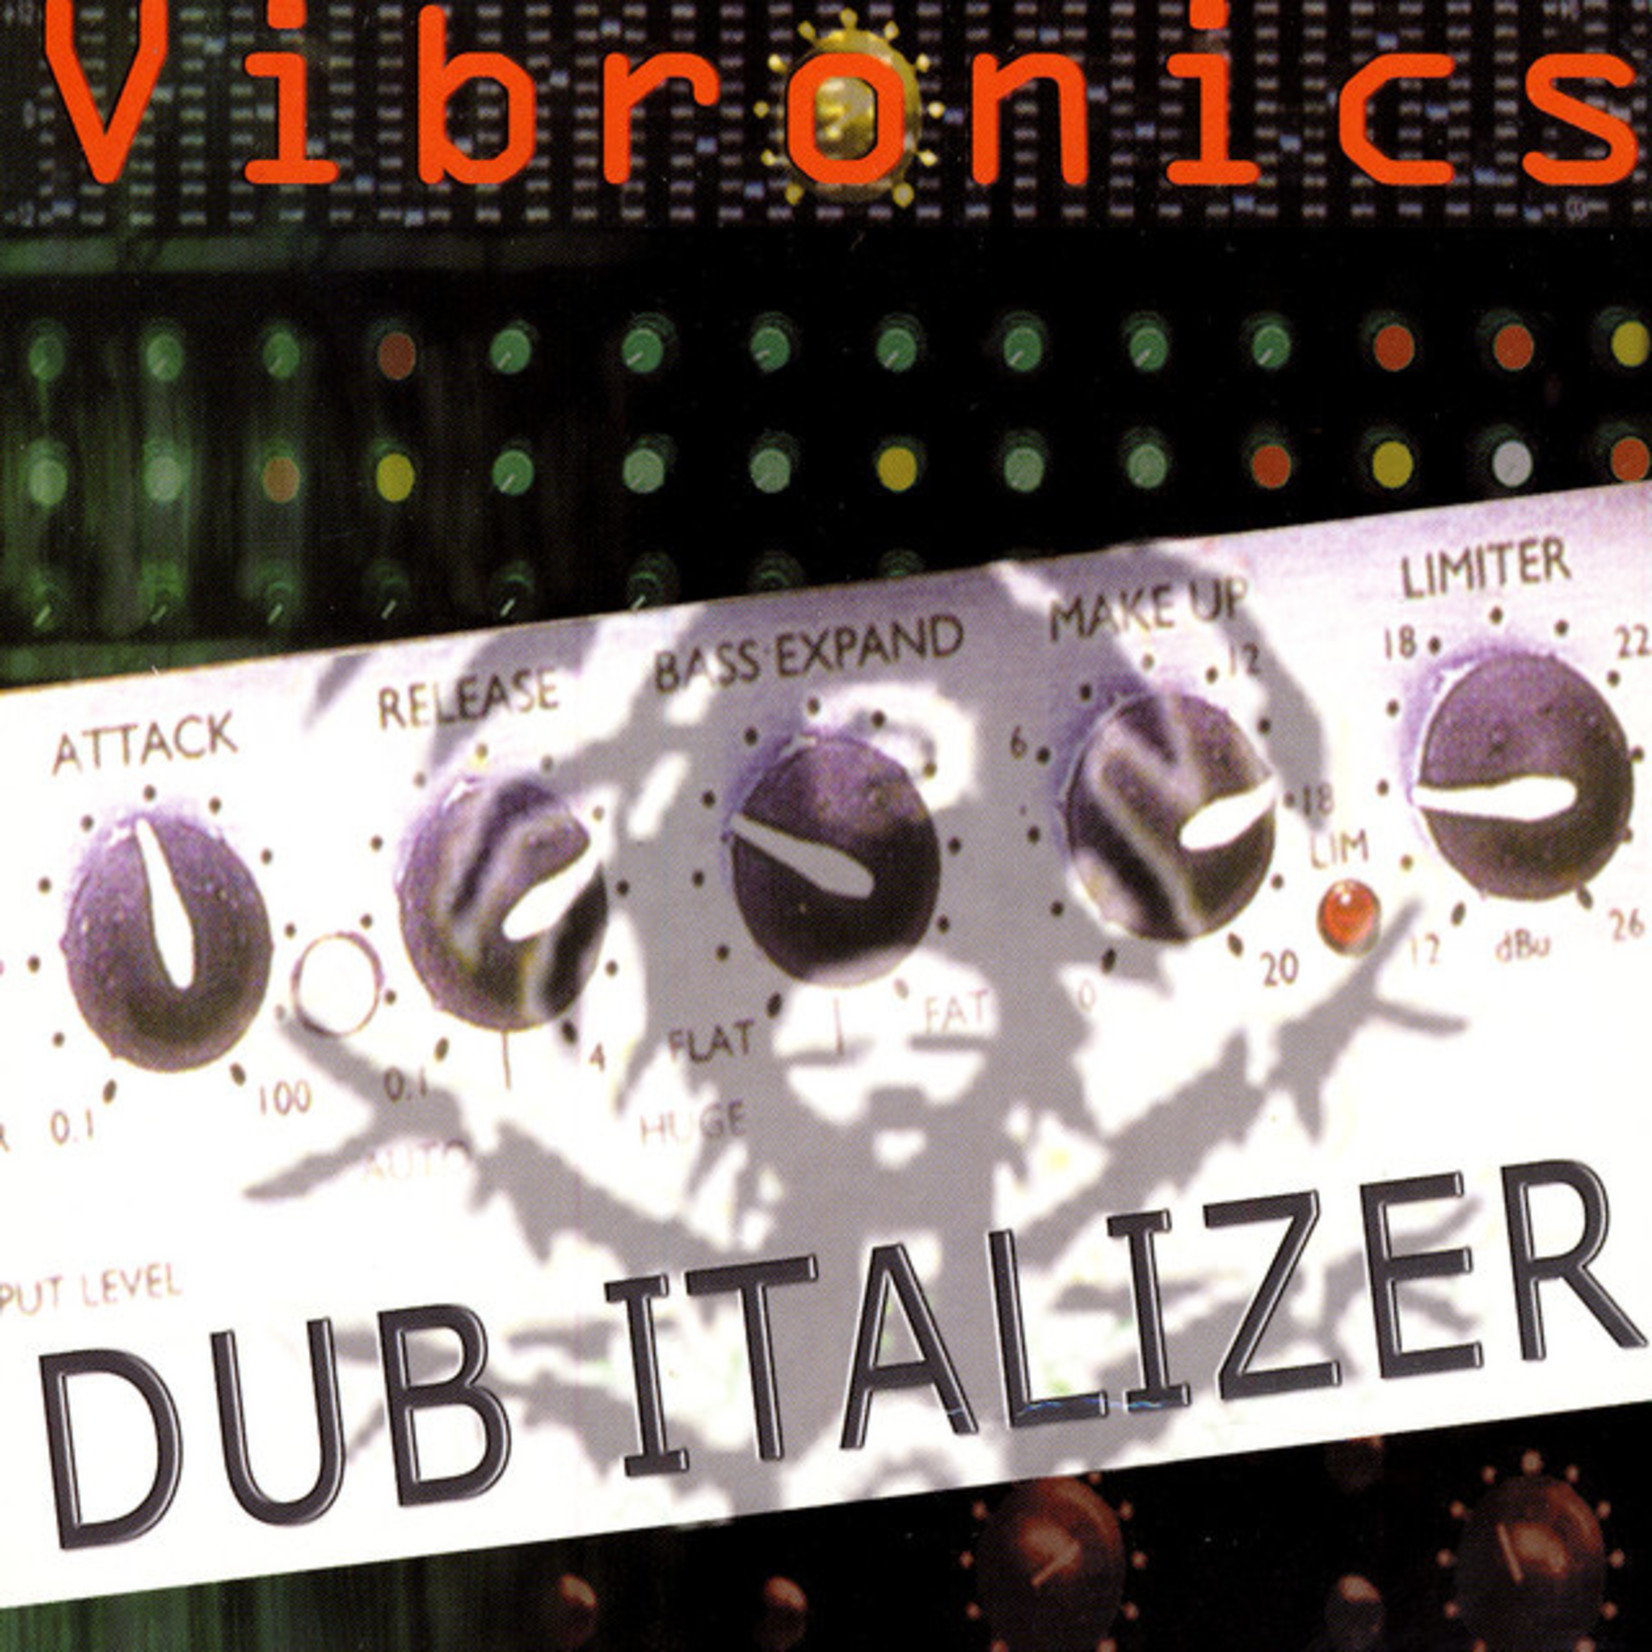 Vibronics – Dub Italizer